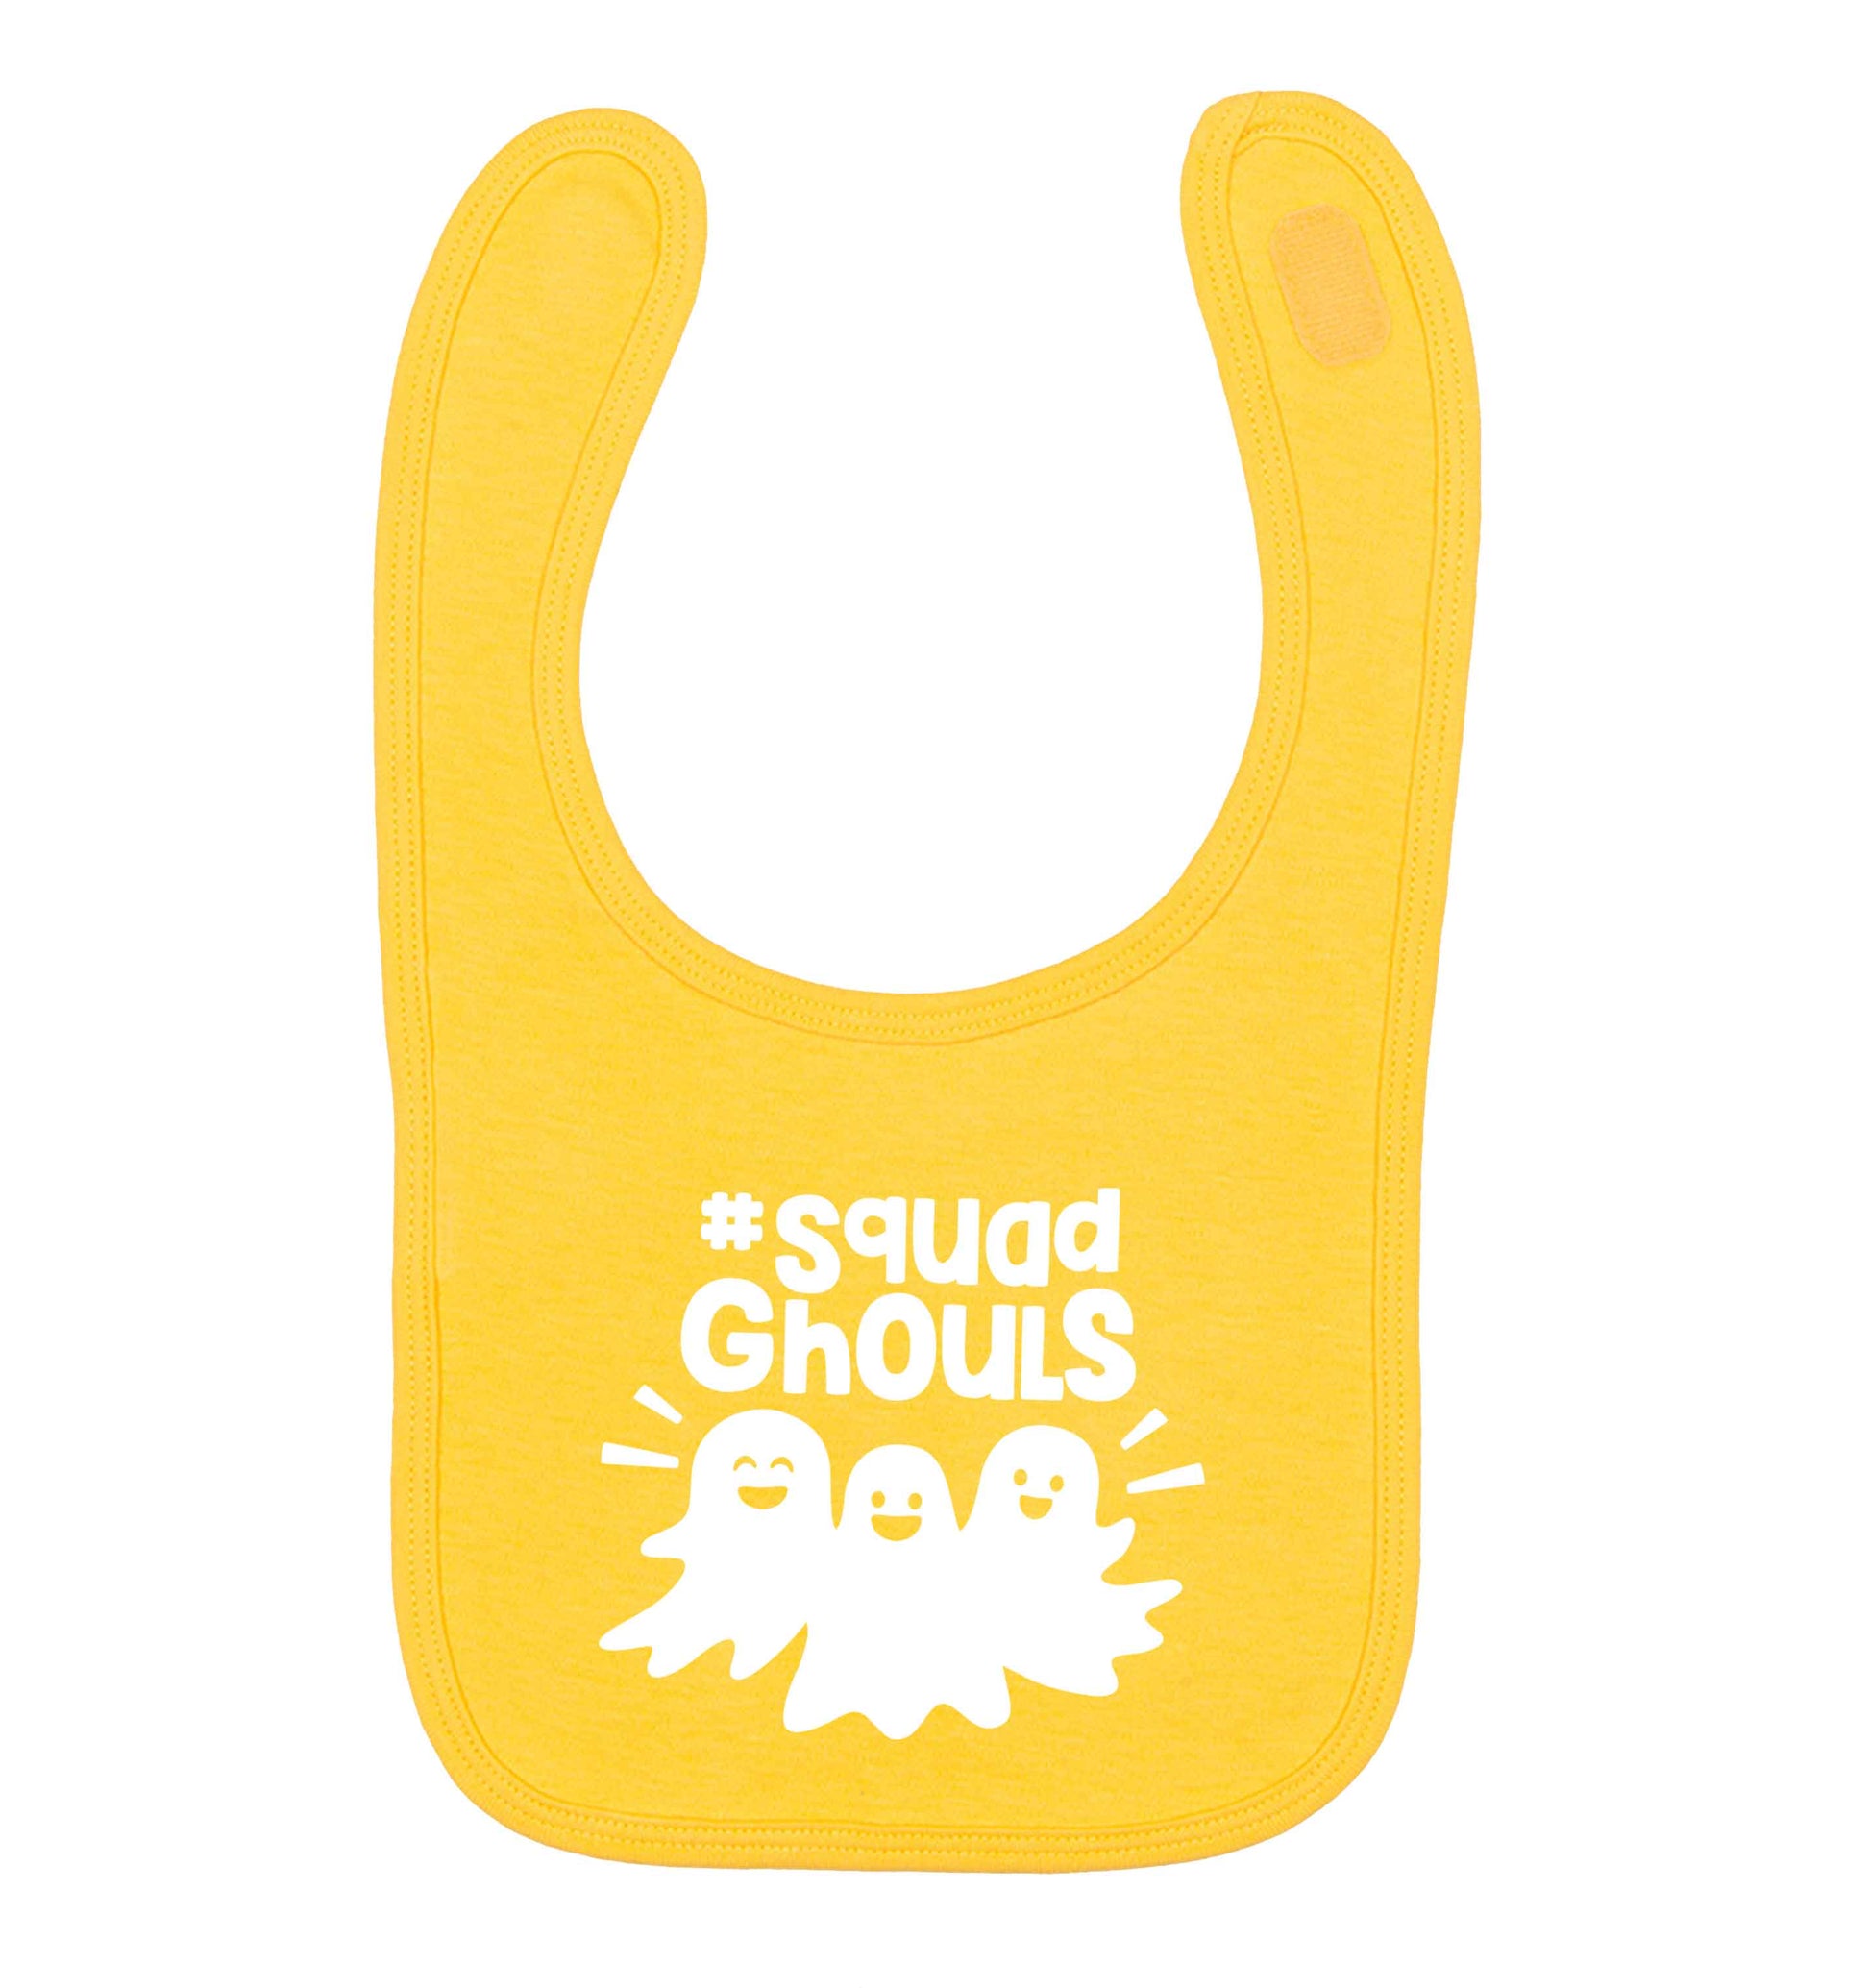 Squad ghouls Kit yellow baby bib